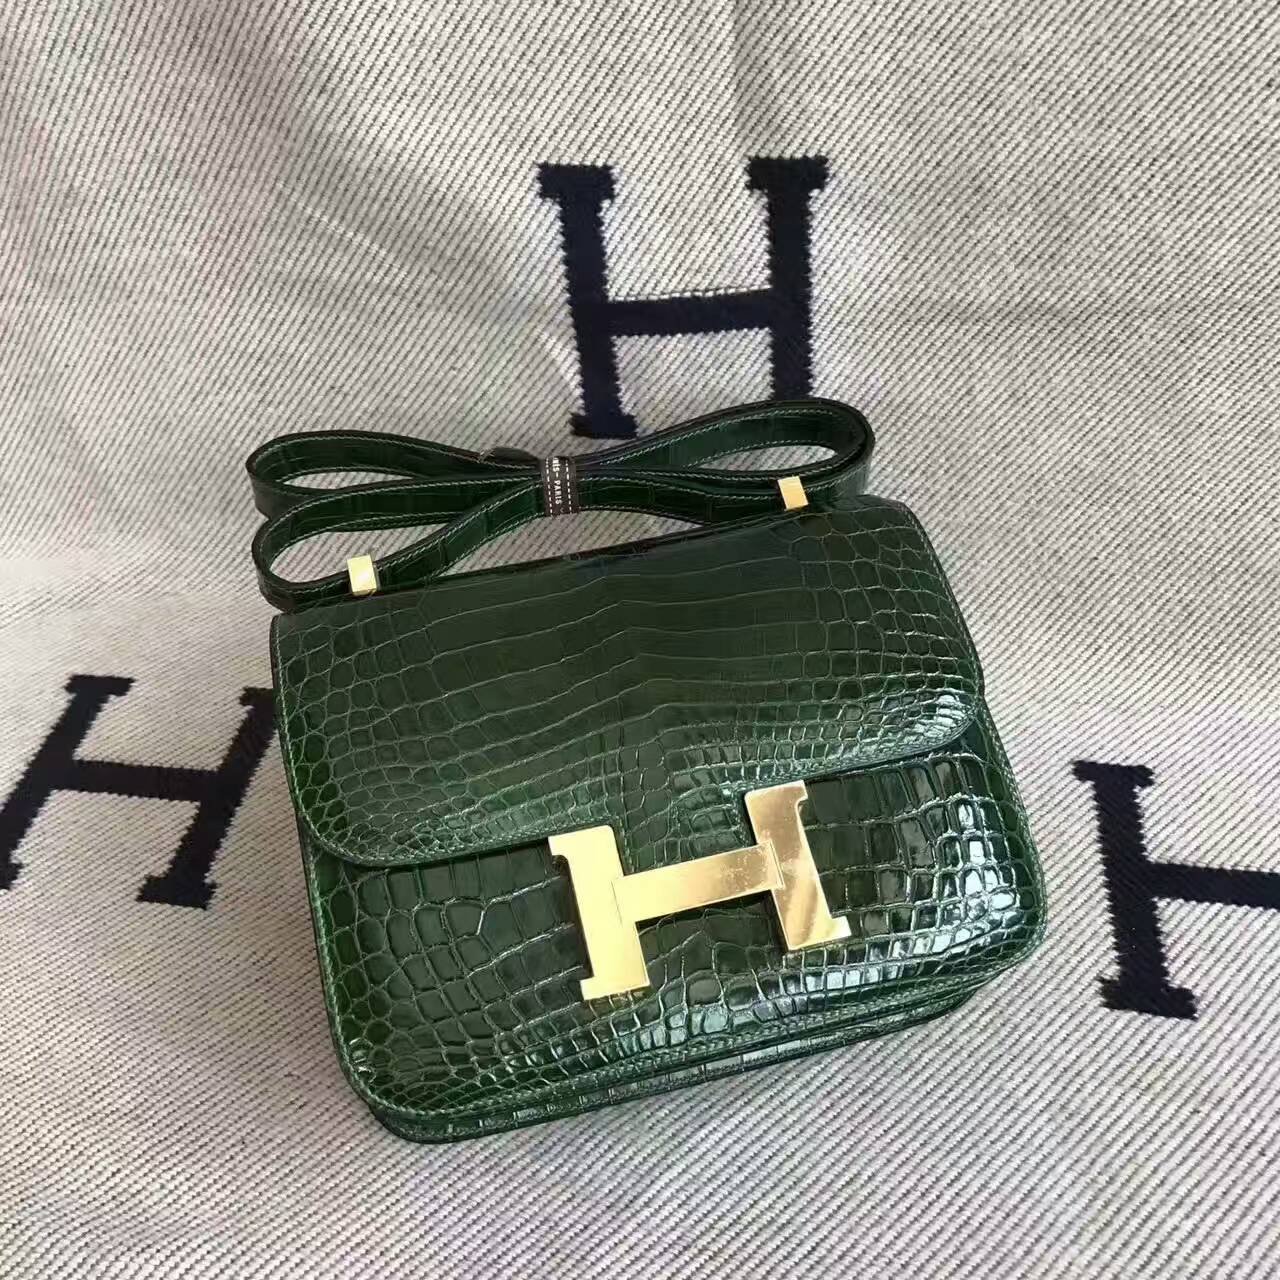 On Sale Hermes CK67 Vert Fonce Crocodile Shiny Leather Constance Bag 24cm